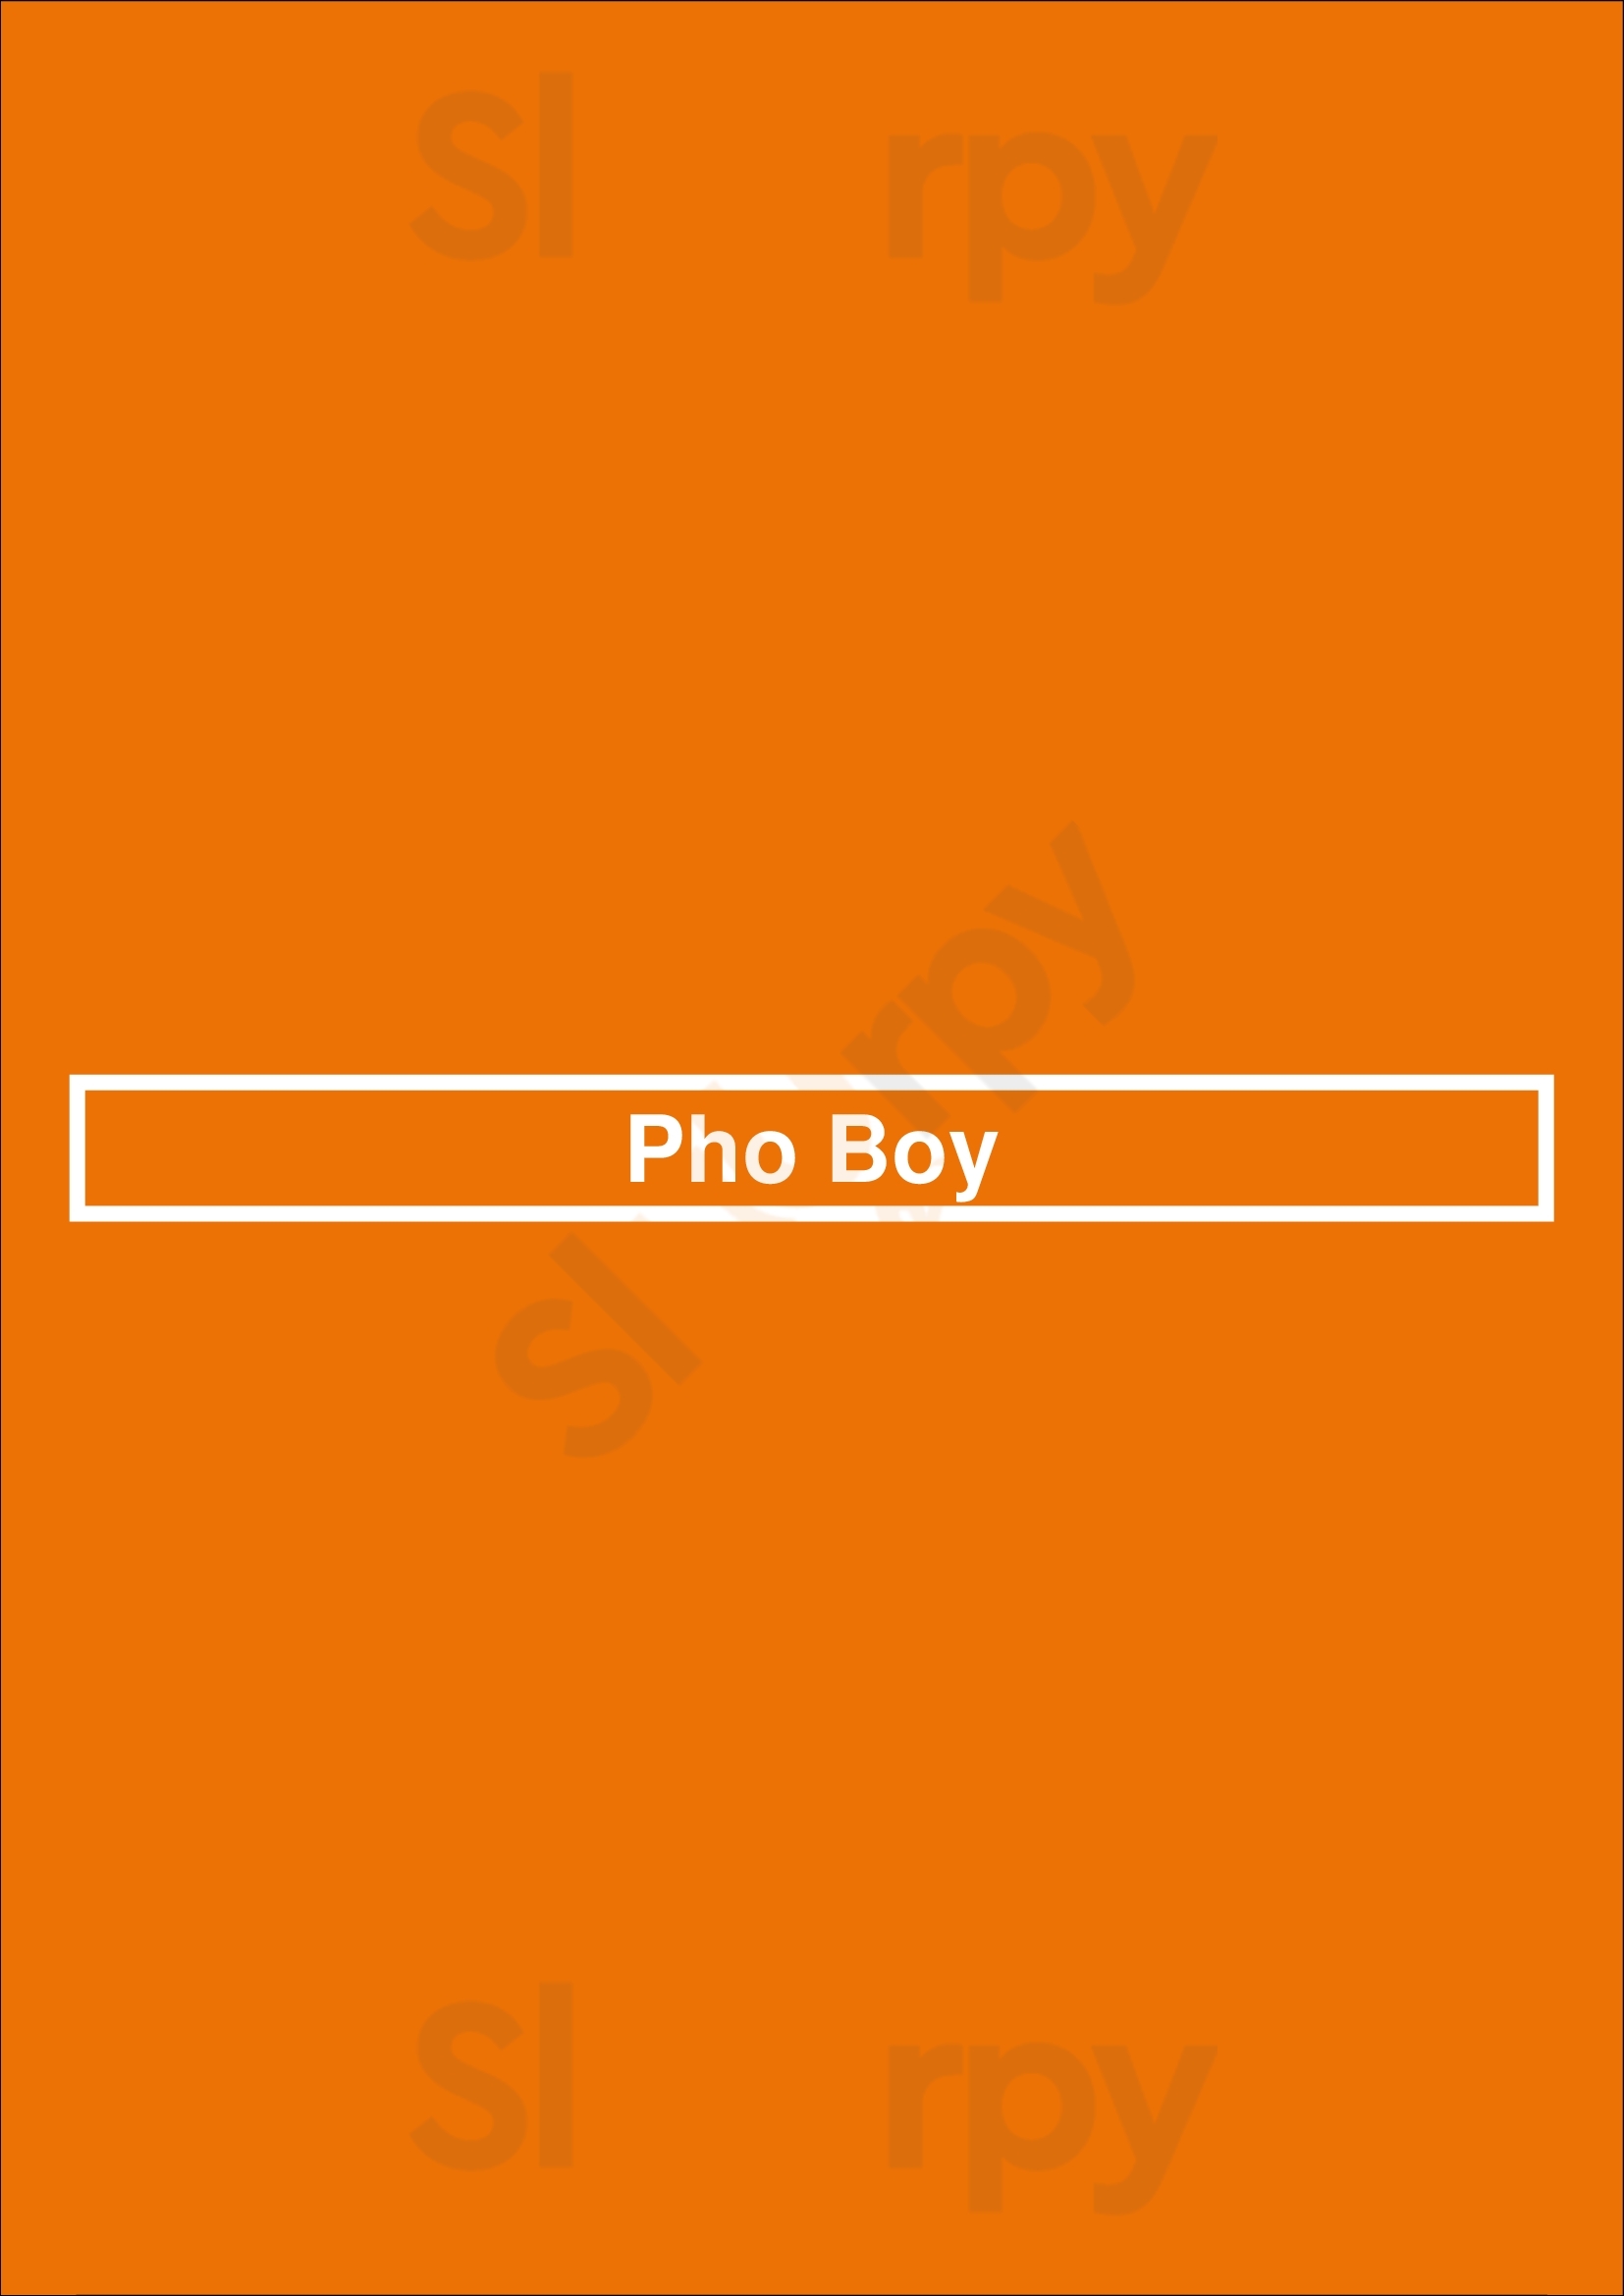 Pho Boy Edmonton Menu - 1